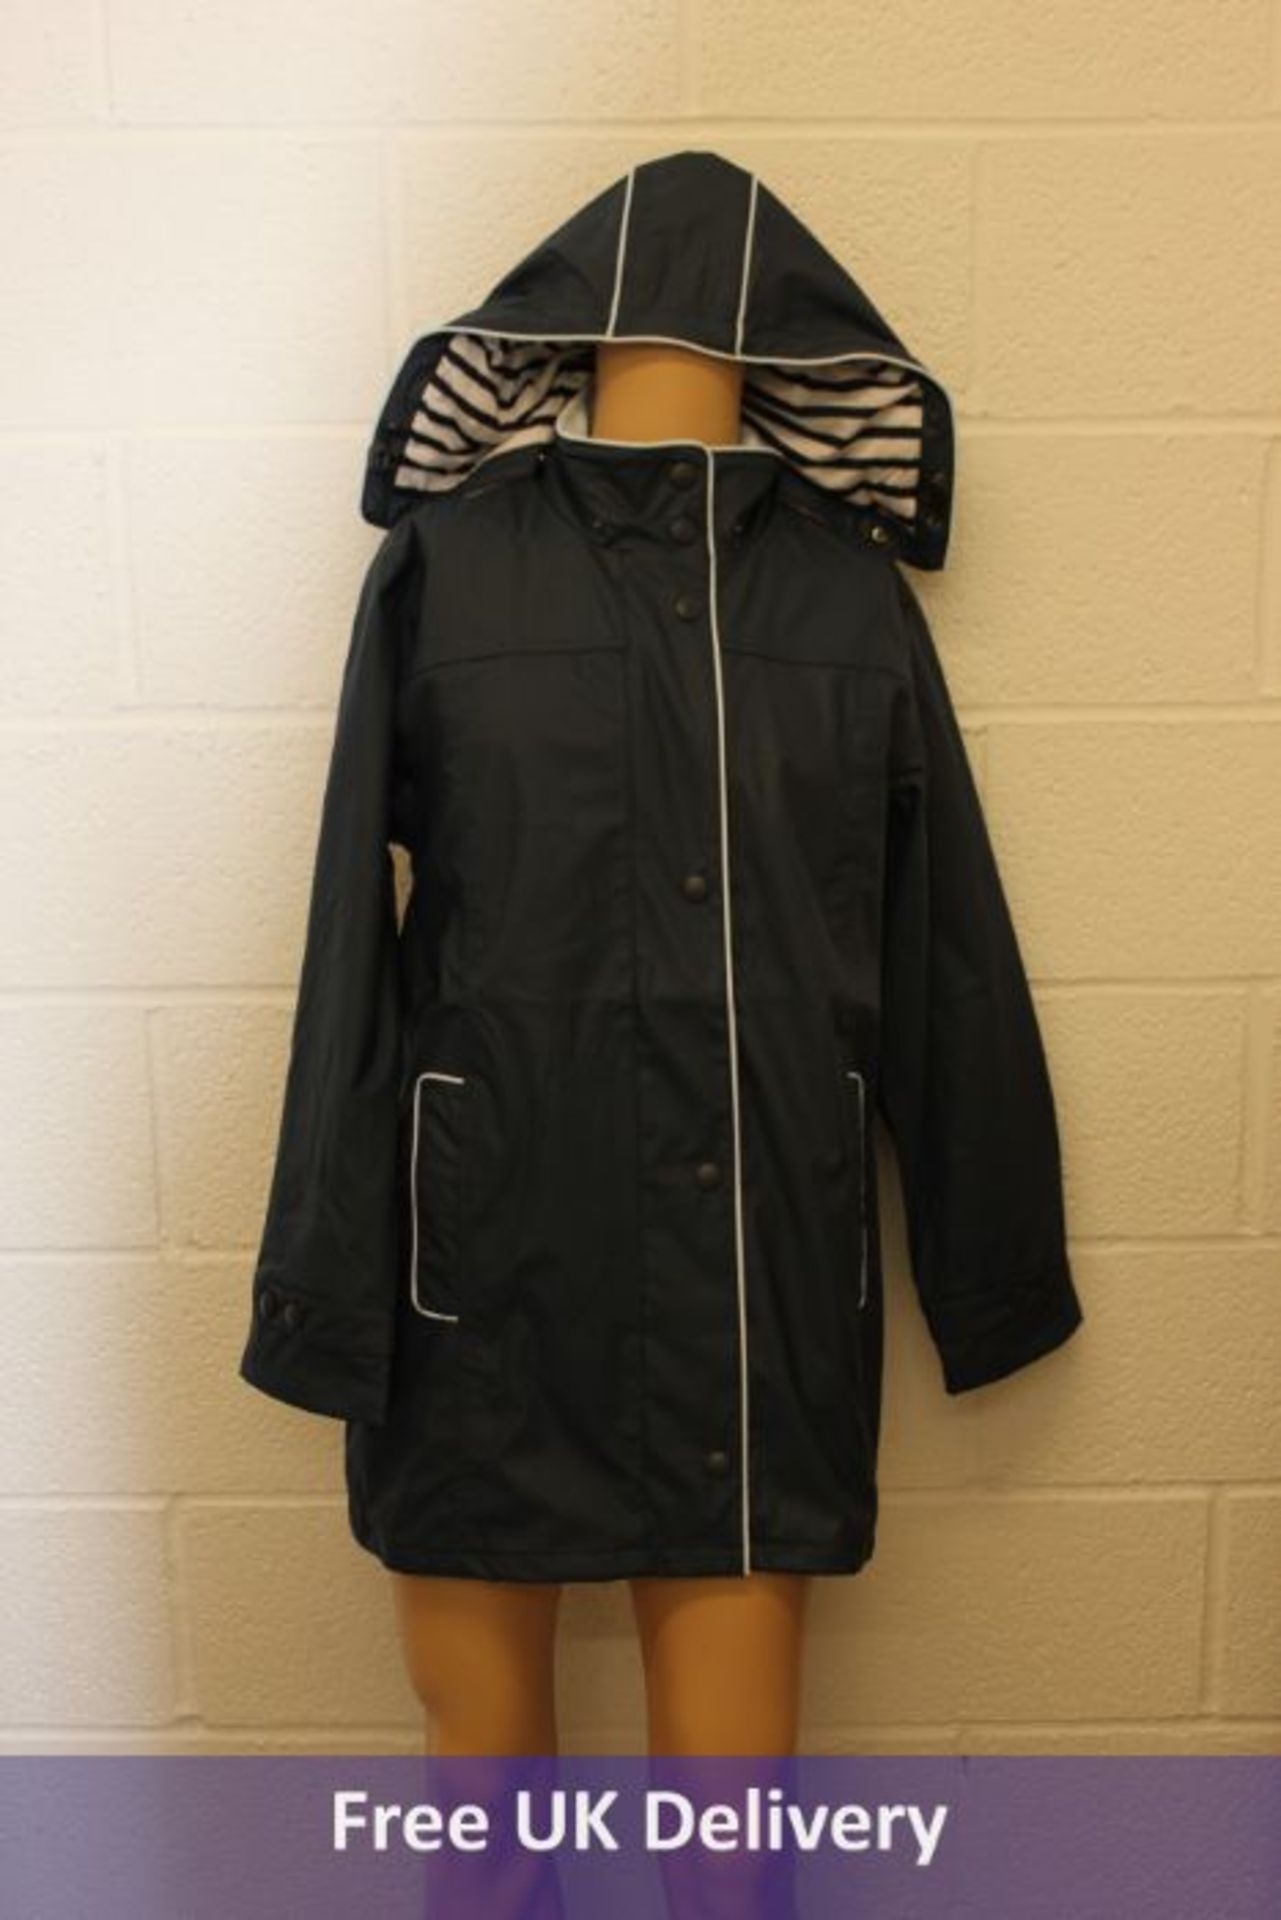 Five Captain Corsaire Women's Regate Ete Waterproof Rain Coats, Navy to include 3x Size 18 and 2x S